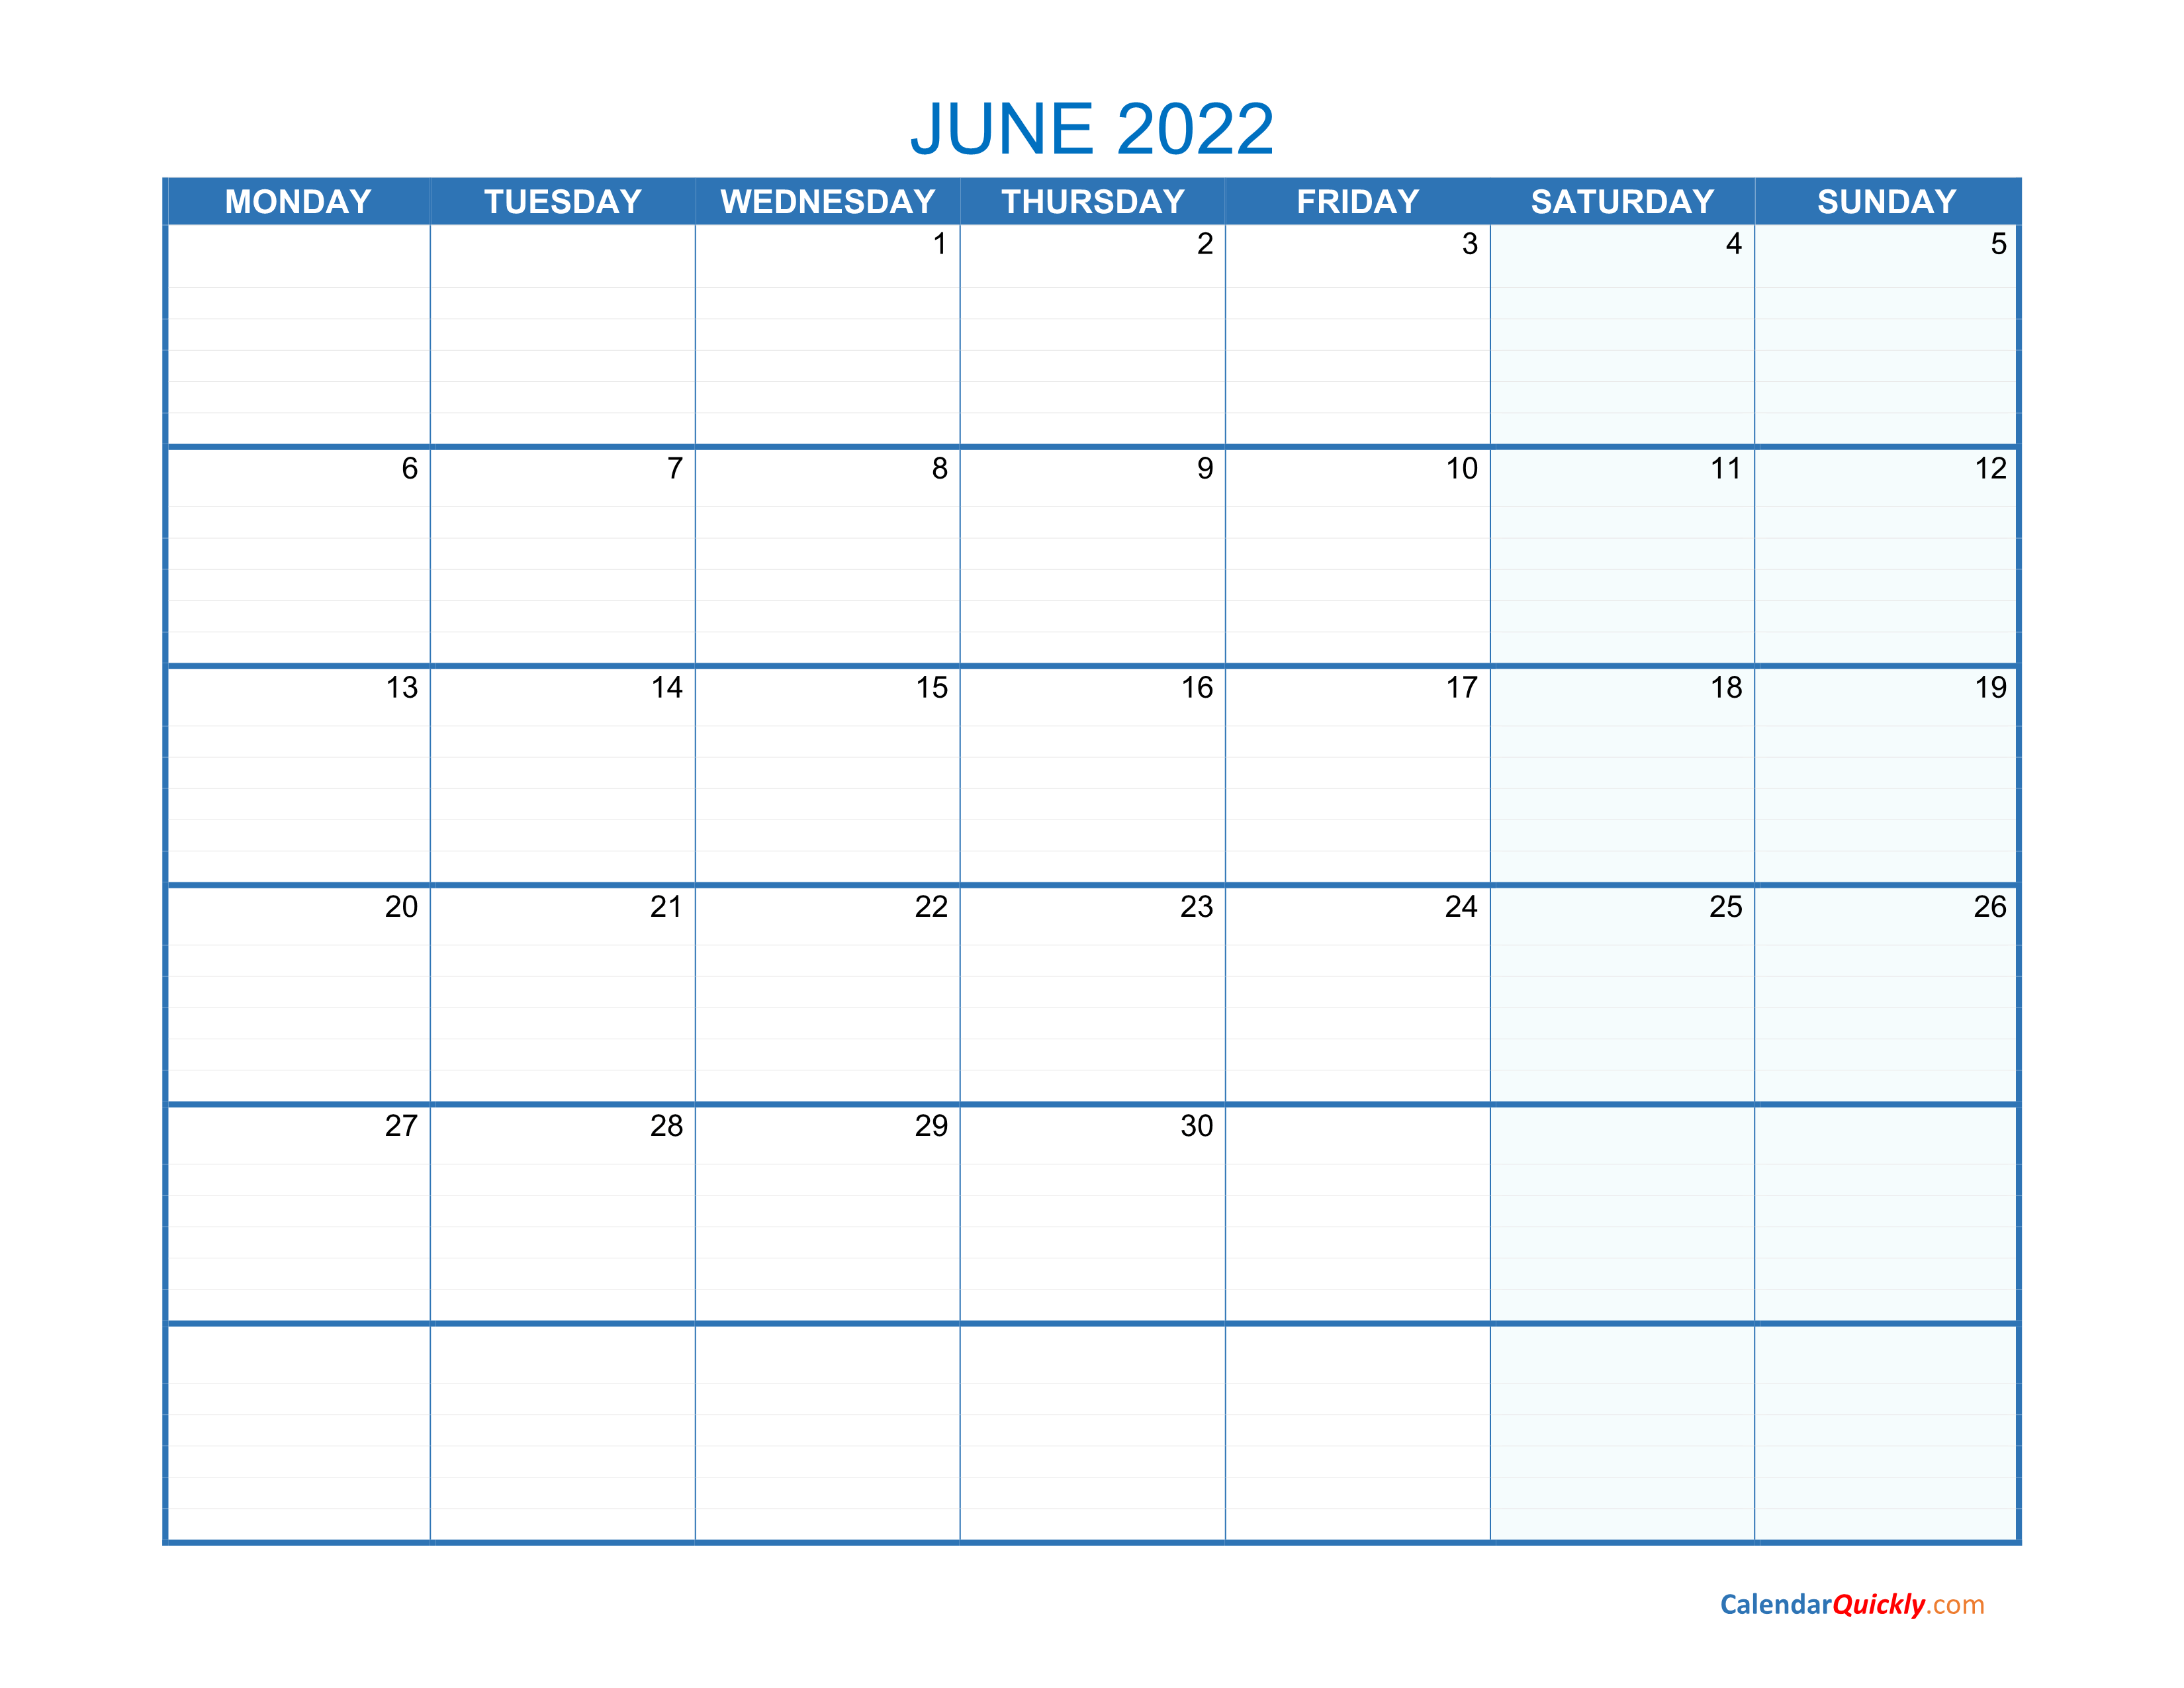 June Monday 2022 Blank Calendar Calendar Quickly